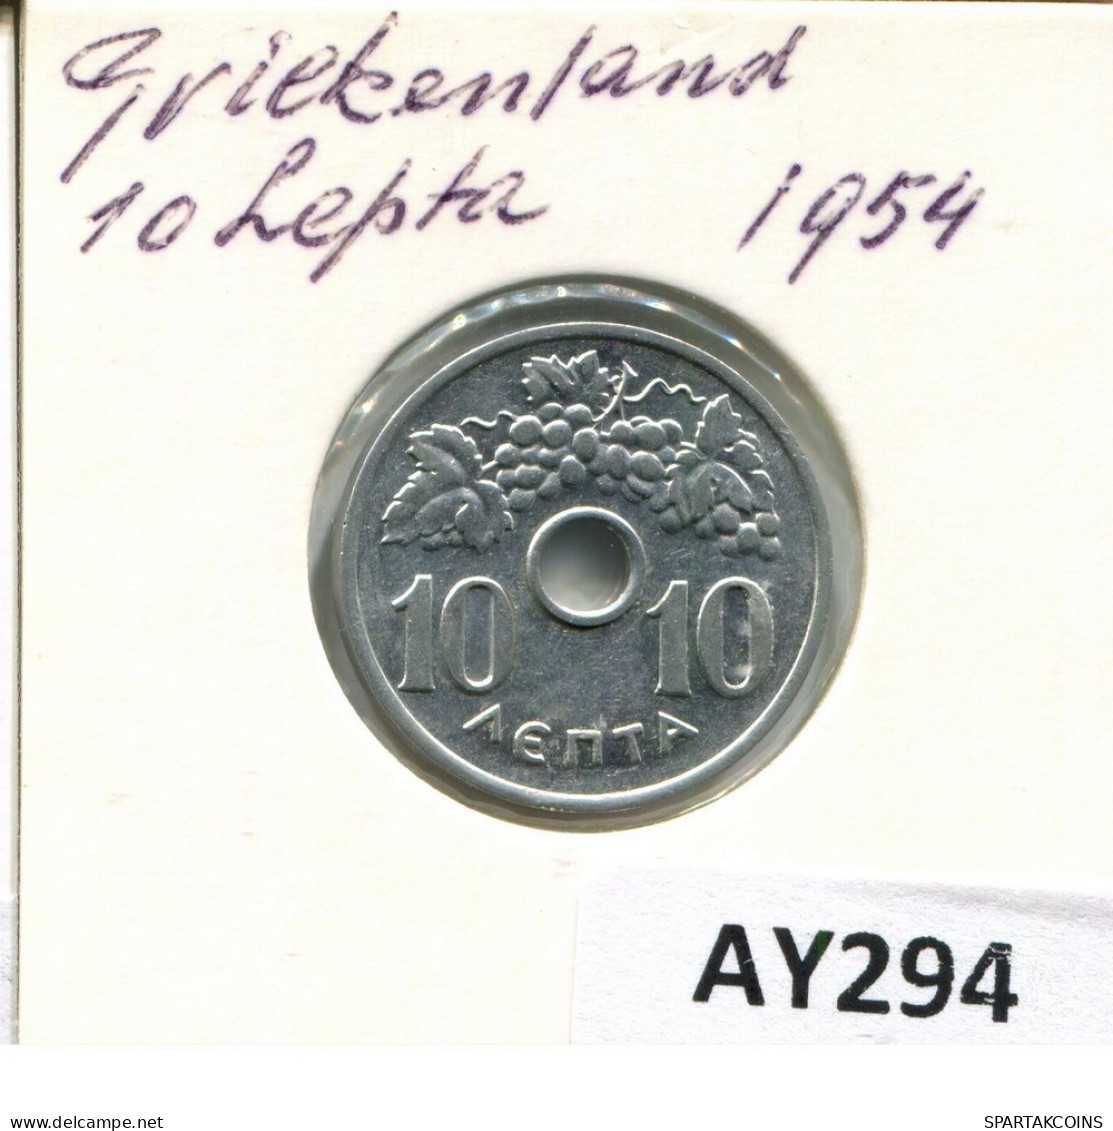 10 LEPTA 1954 GREECE Coin #AY294.U.A - Grèce